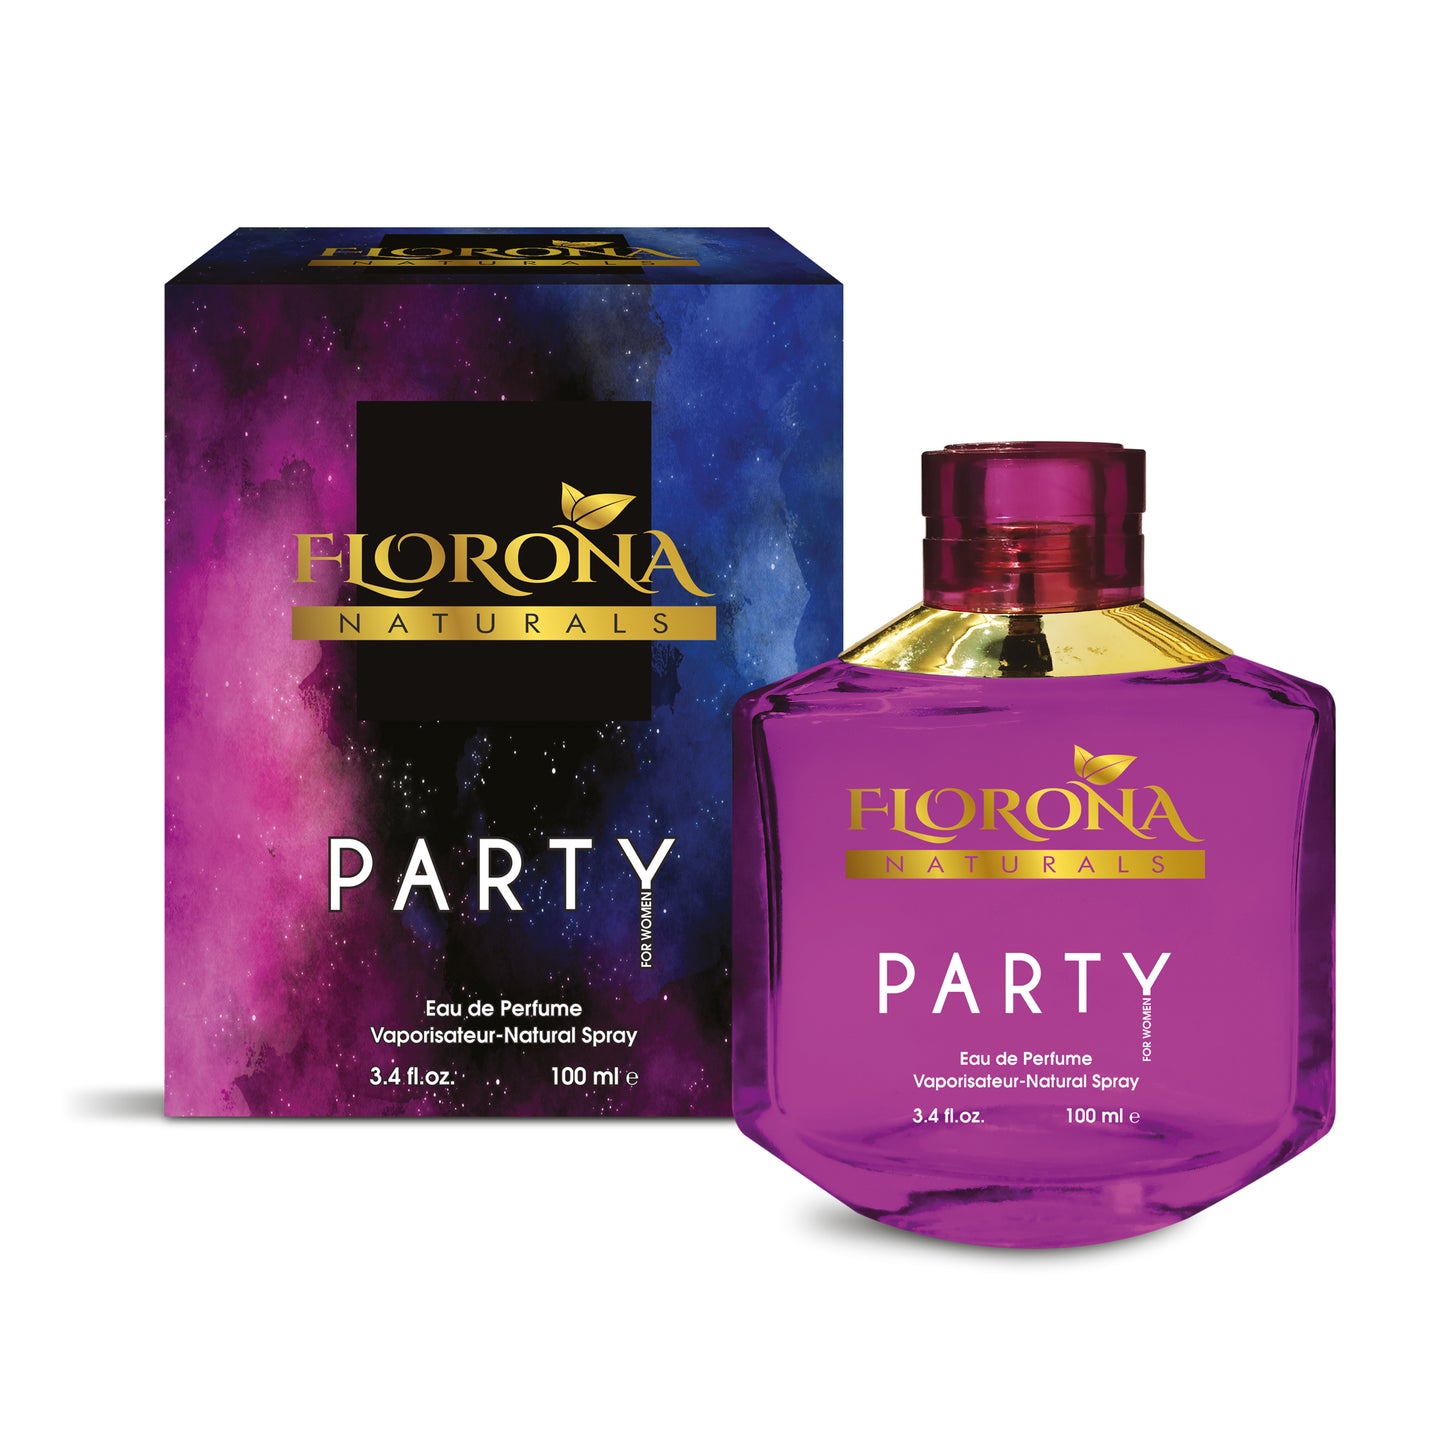 Florona Naturals Party Eau De perfume 100ML